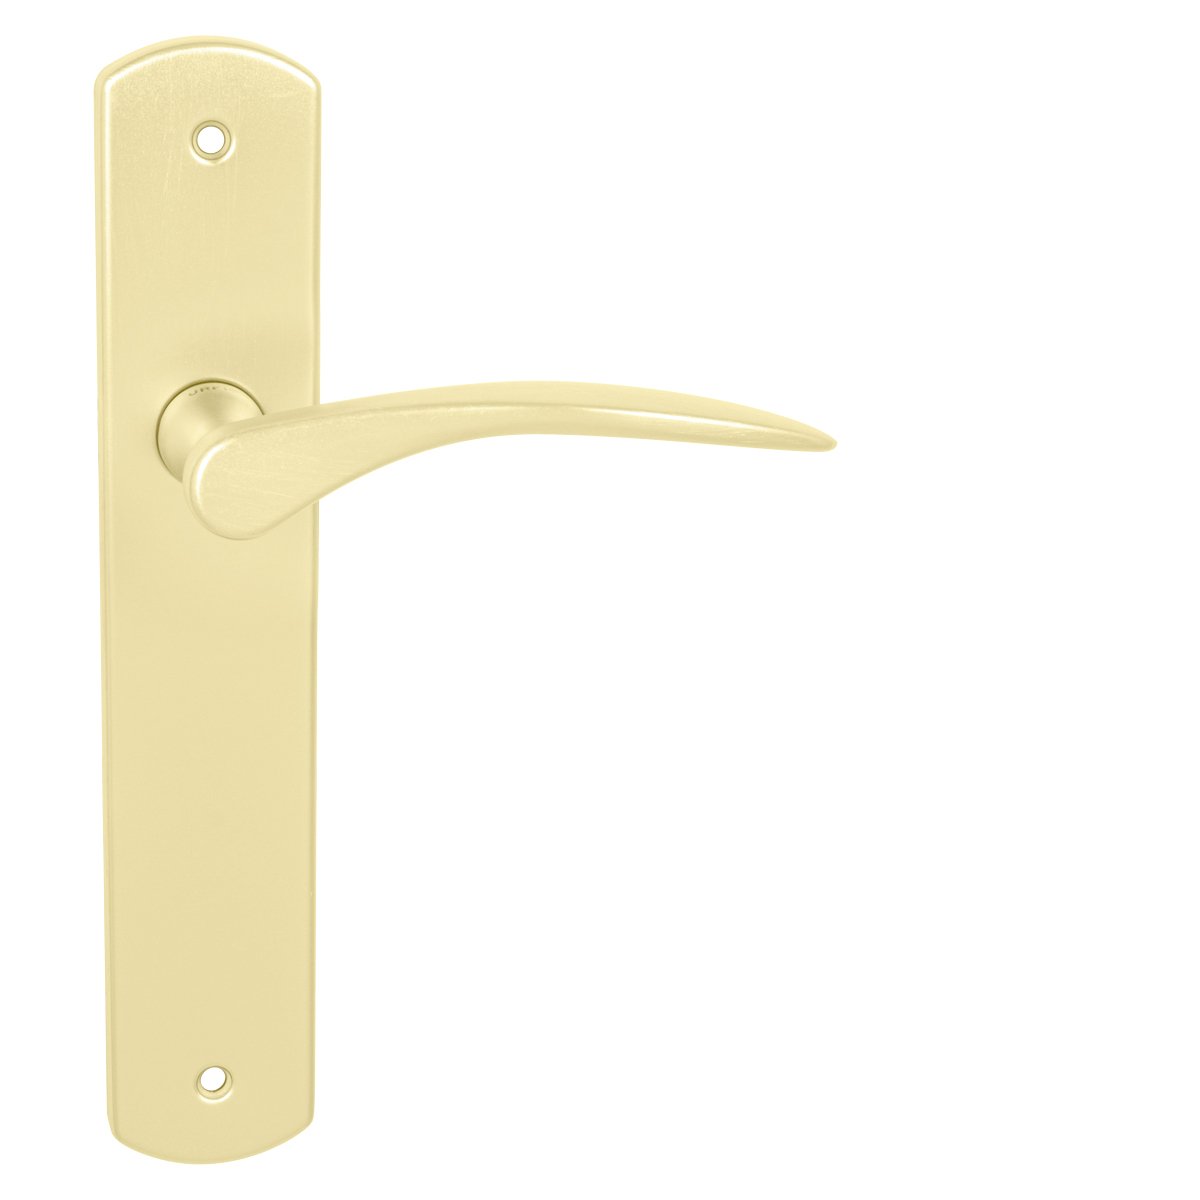 UC - LAMA - VS WC kľúč, 90 mm, kľučka/kľučka